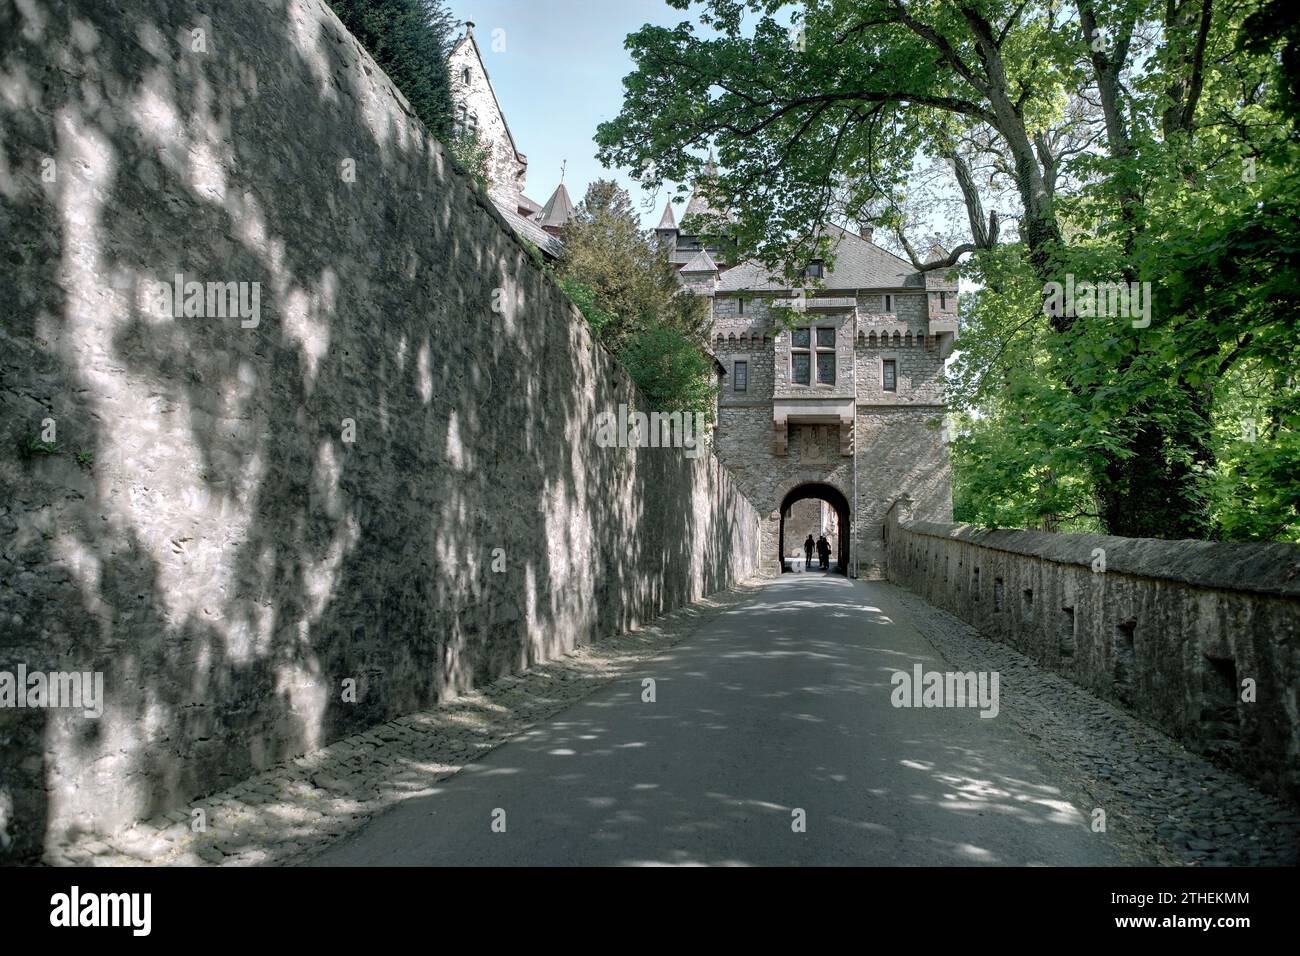 Castello di Braunfels, Braunfels, Assia, Deutschland, Europa Foto Stock